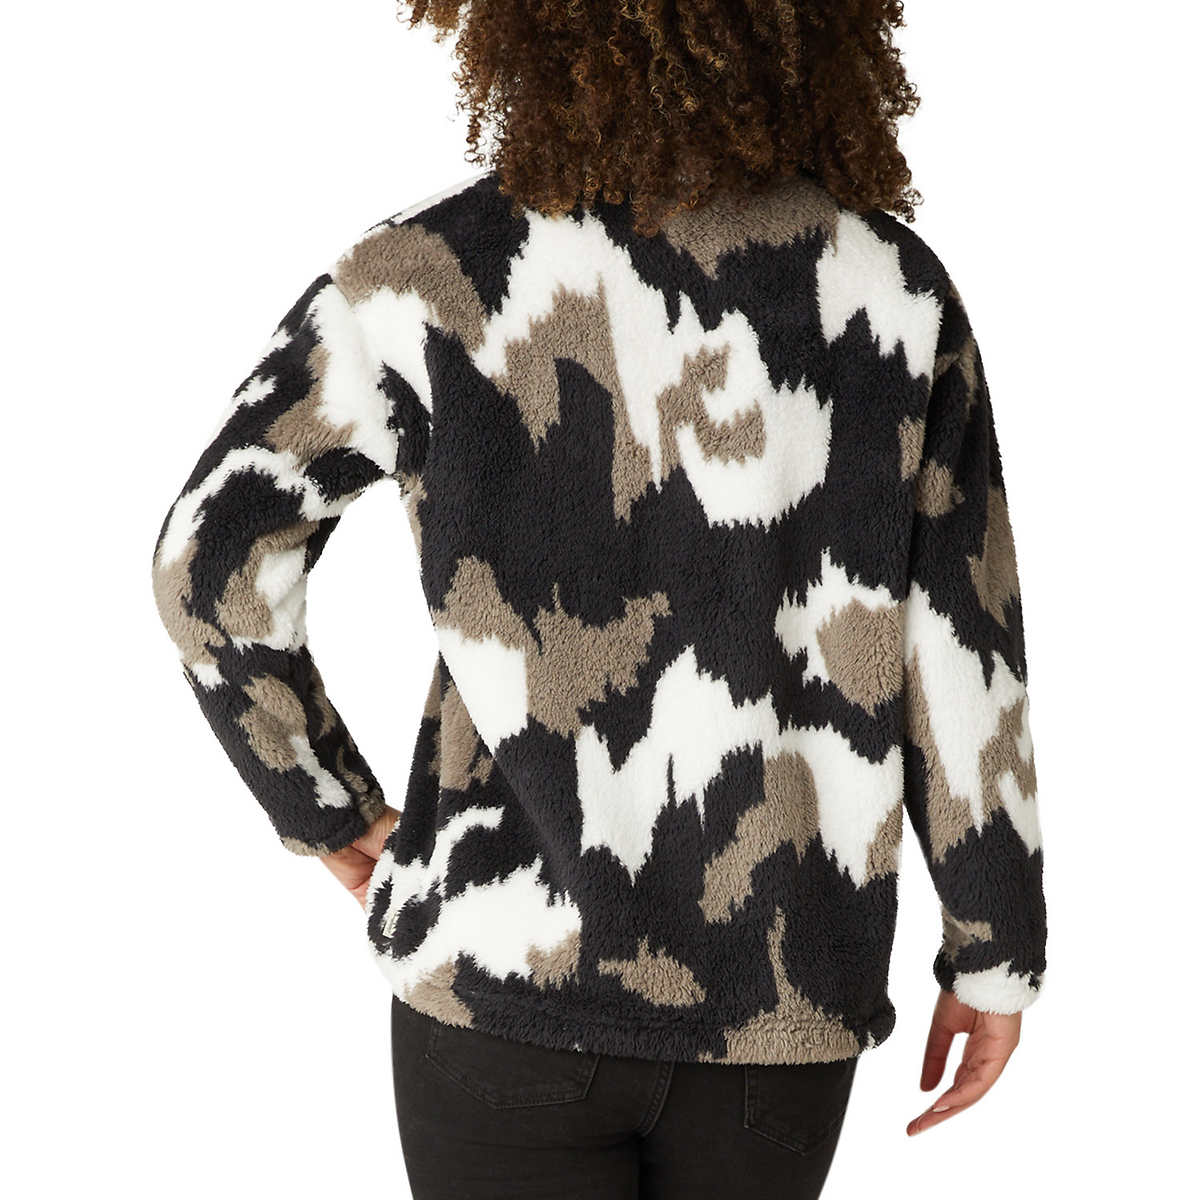 Eddie Bauer Women's Ultra Soft Plush Fleece Quarter Zip Sweatshirt Camo Print Pullover Top